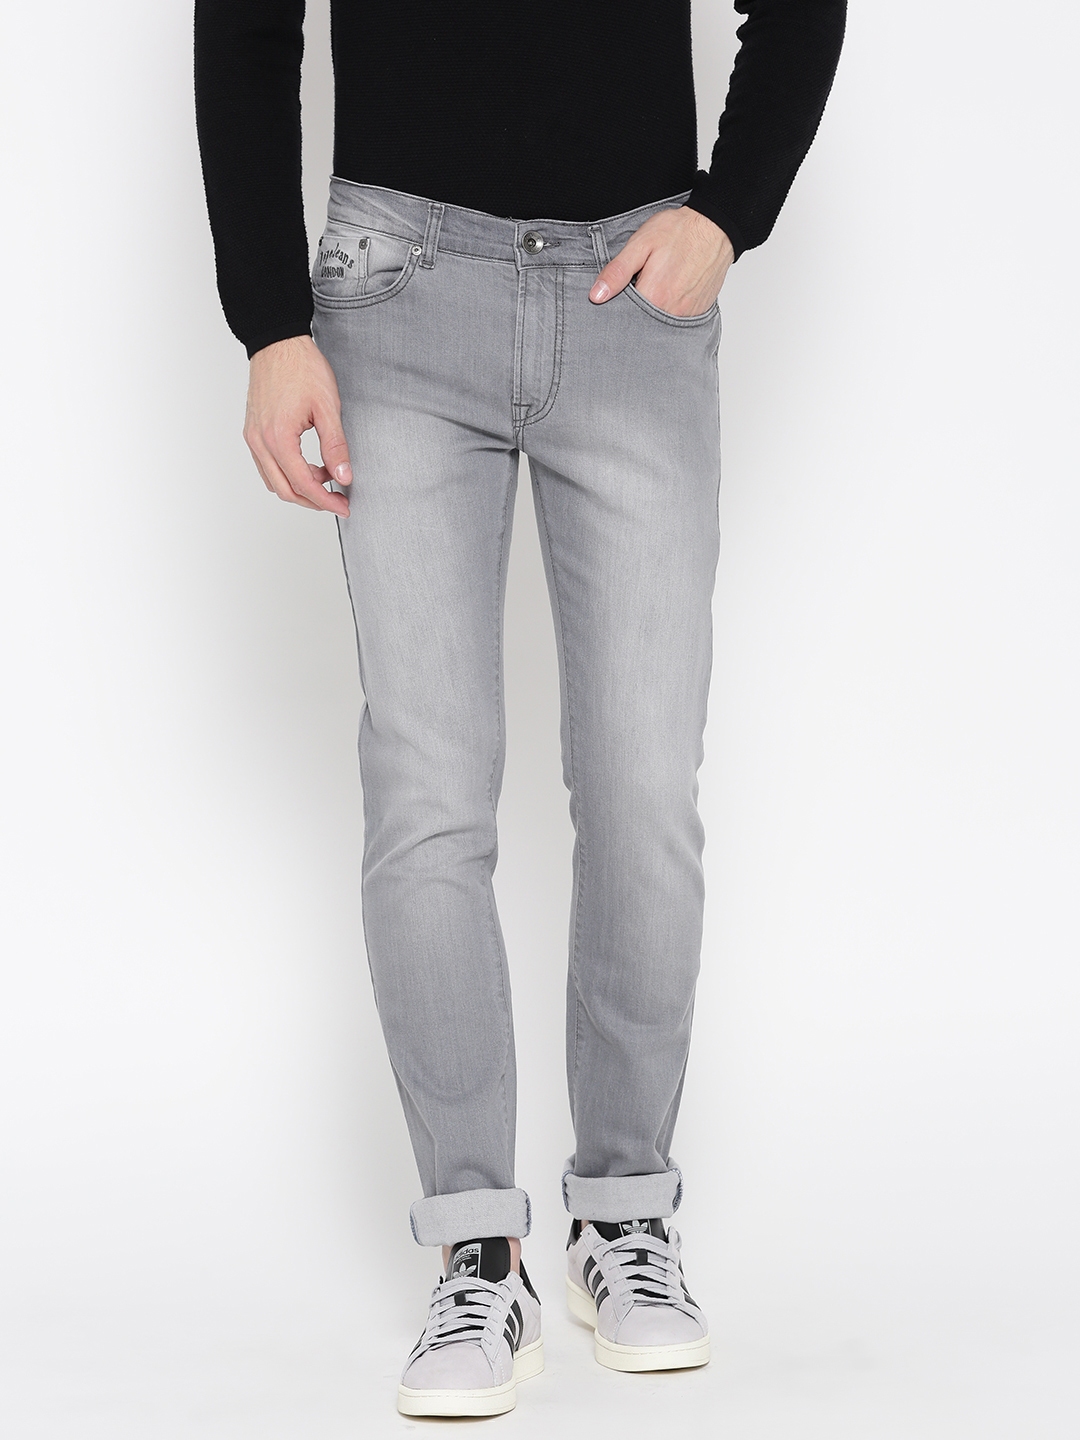 pepe jeans grey slim jeans